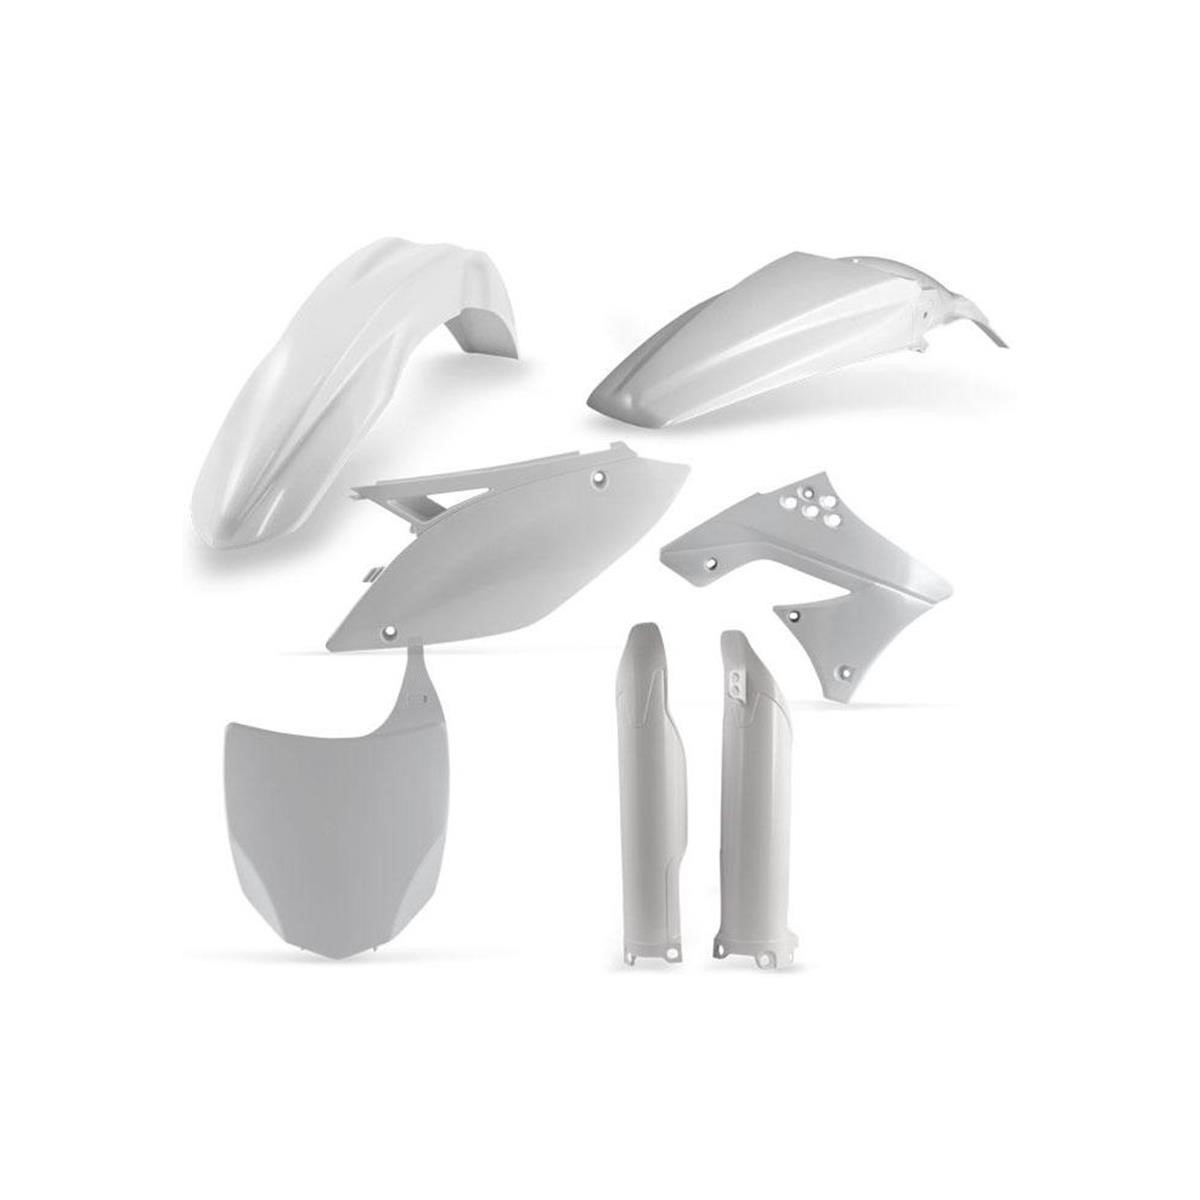 Acerbis Kit Plastiche completo Full-Kit Kawasaki KXF 450 13-15, Bianco